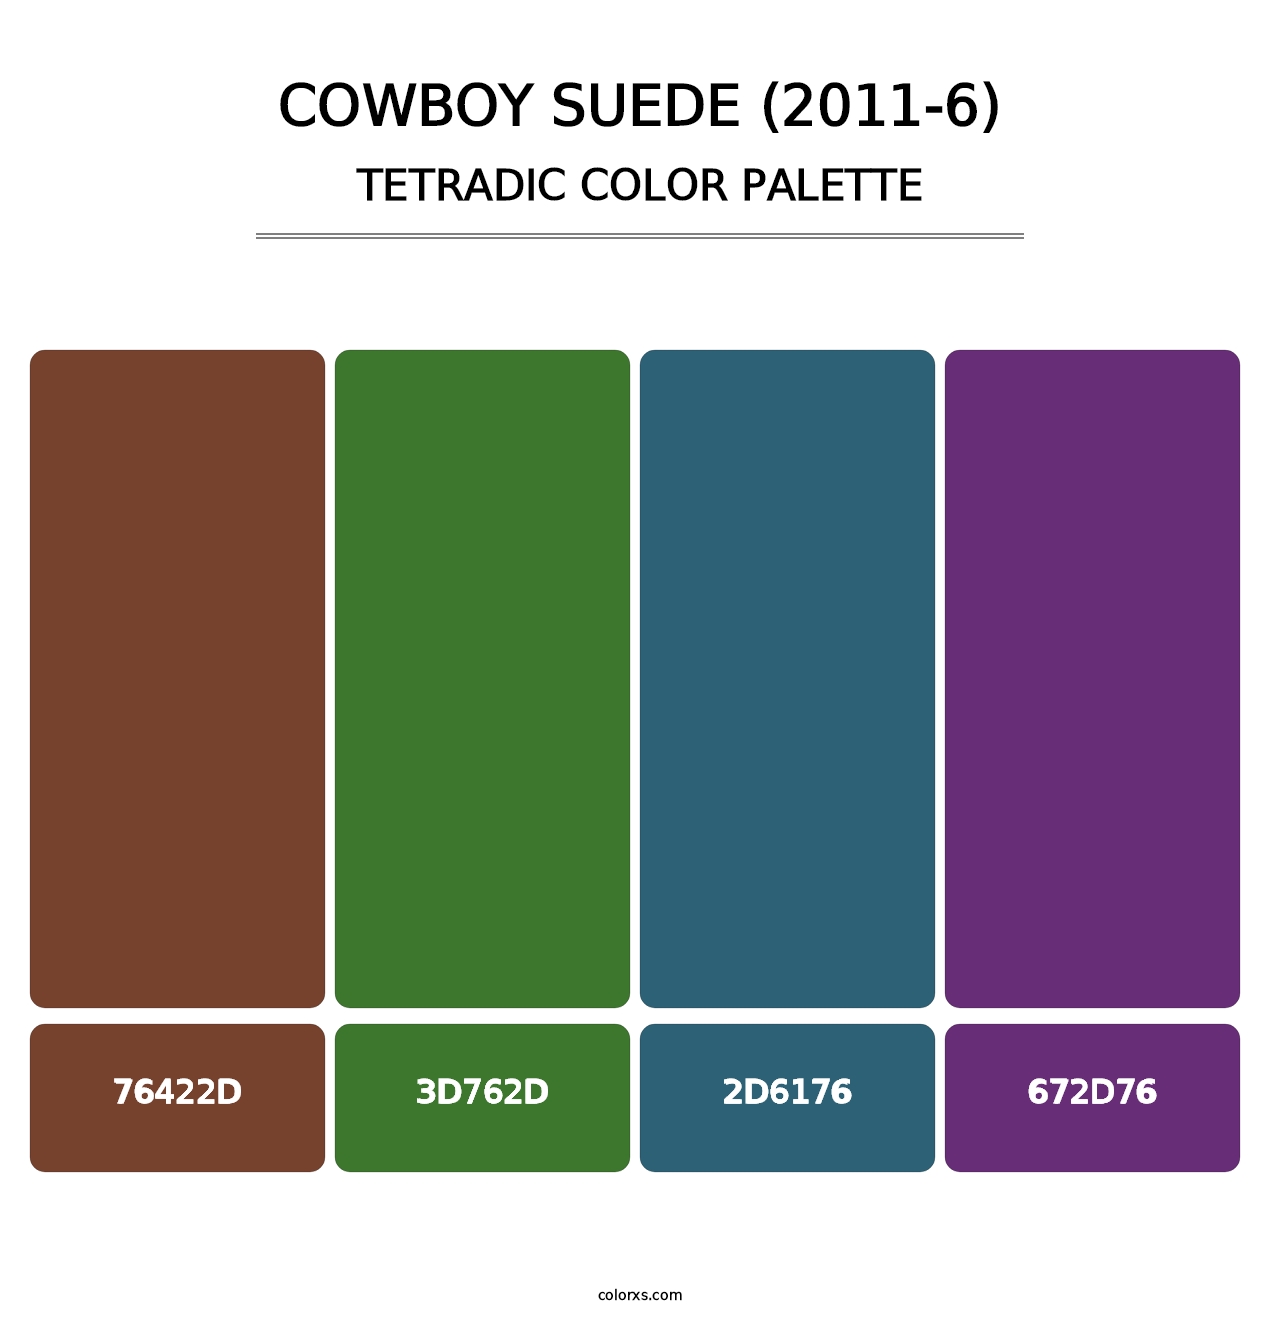 Cowboy Suede (2011-6) - Tetradic Color Palette